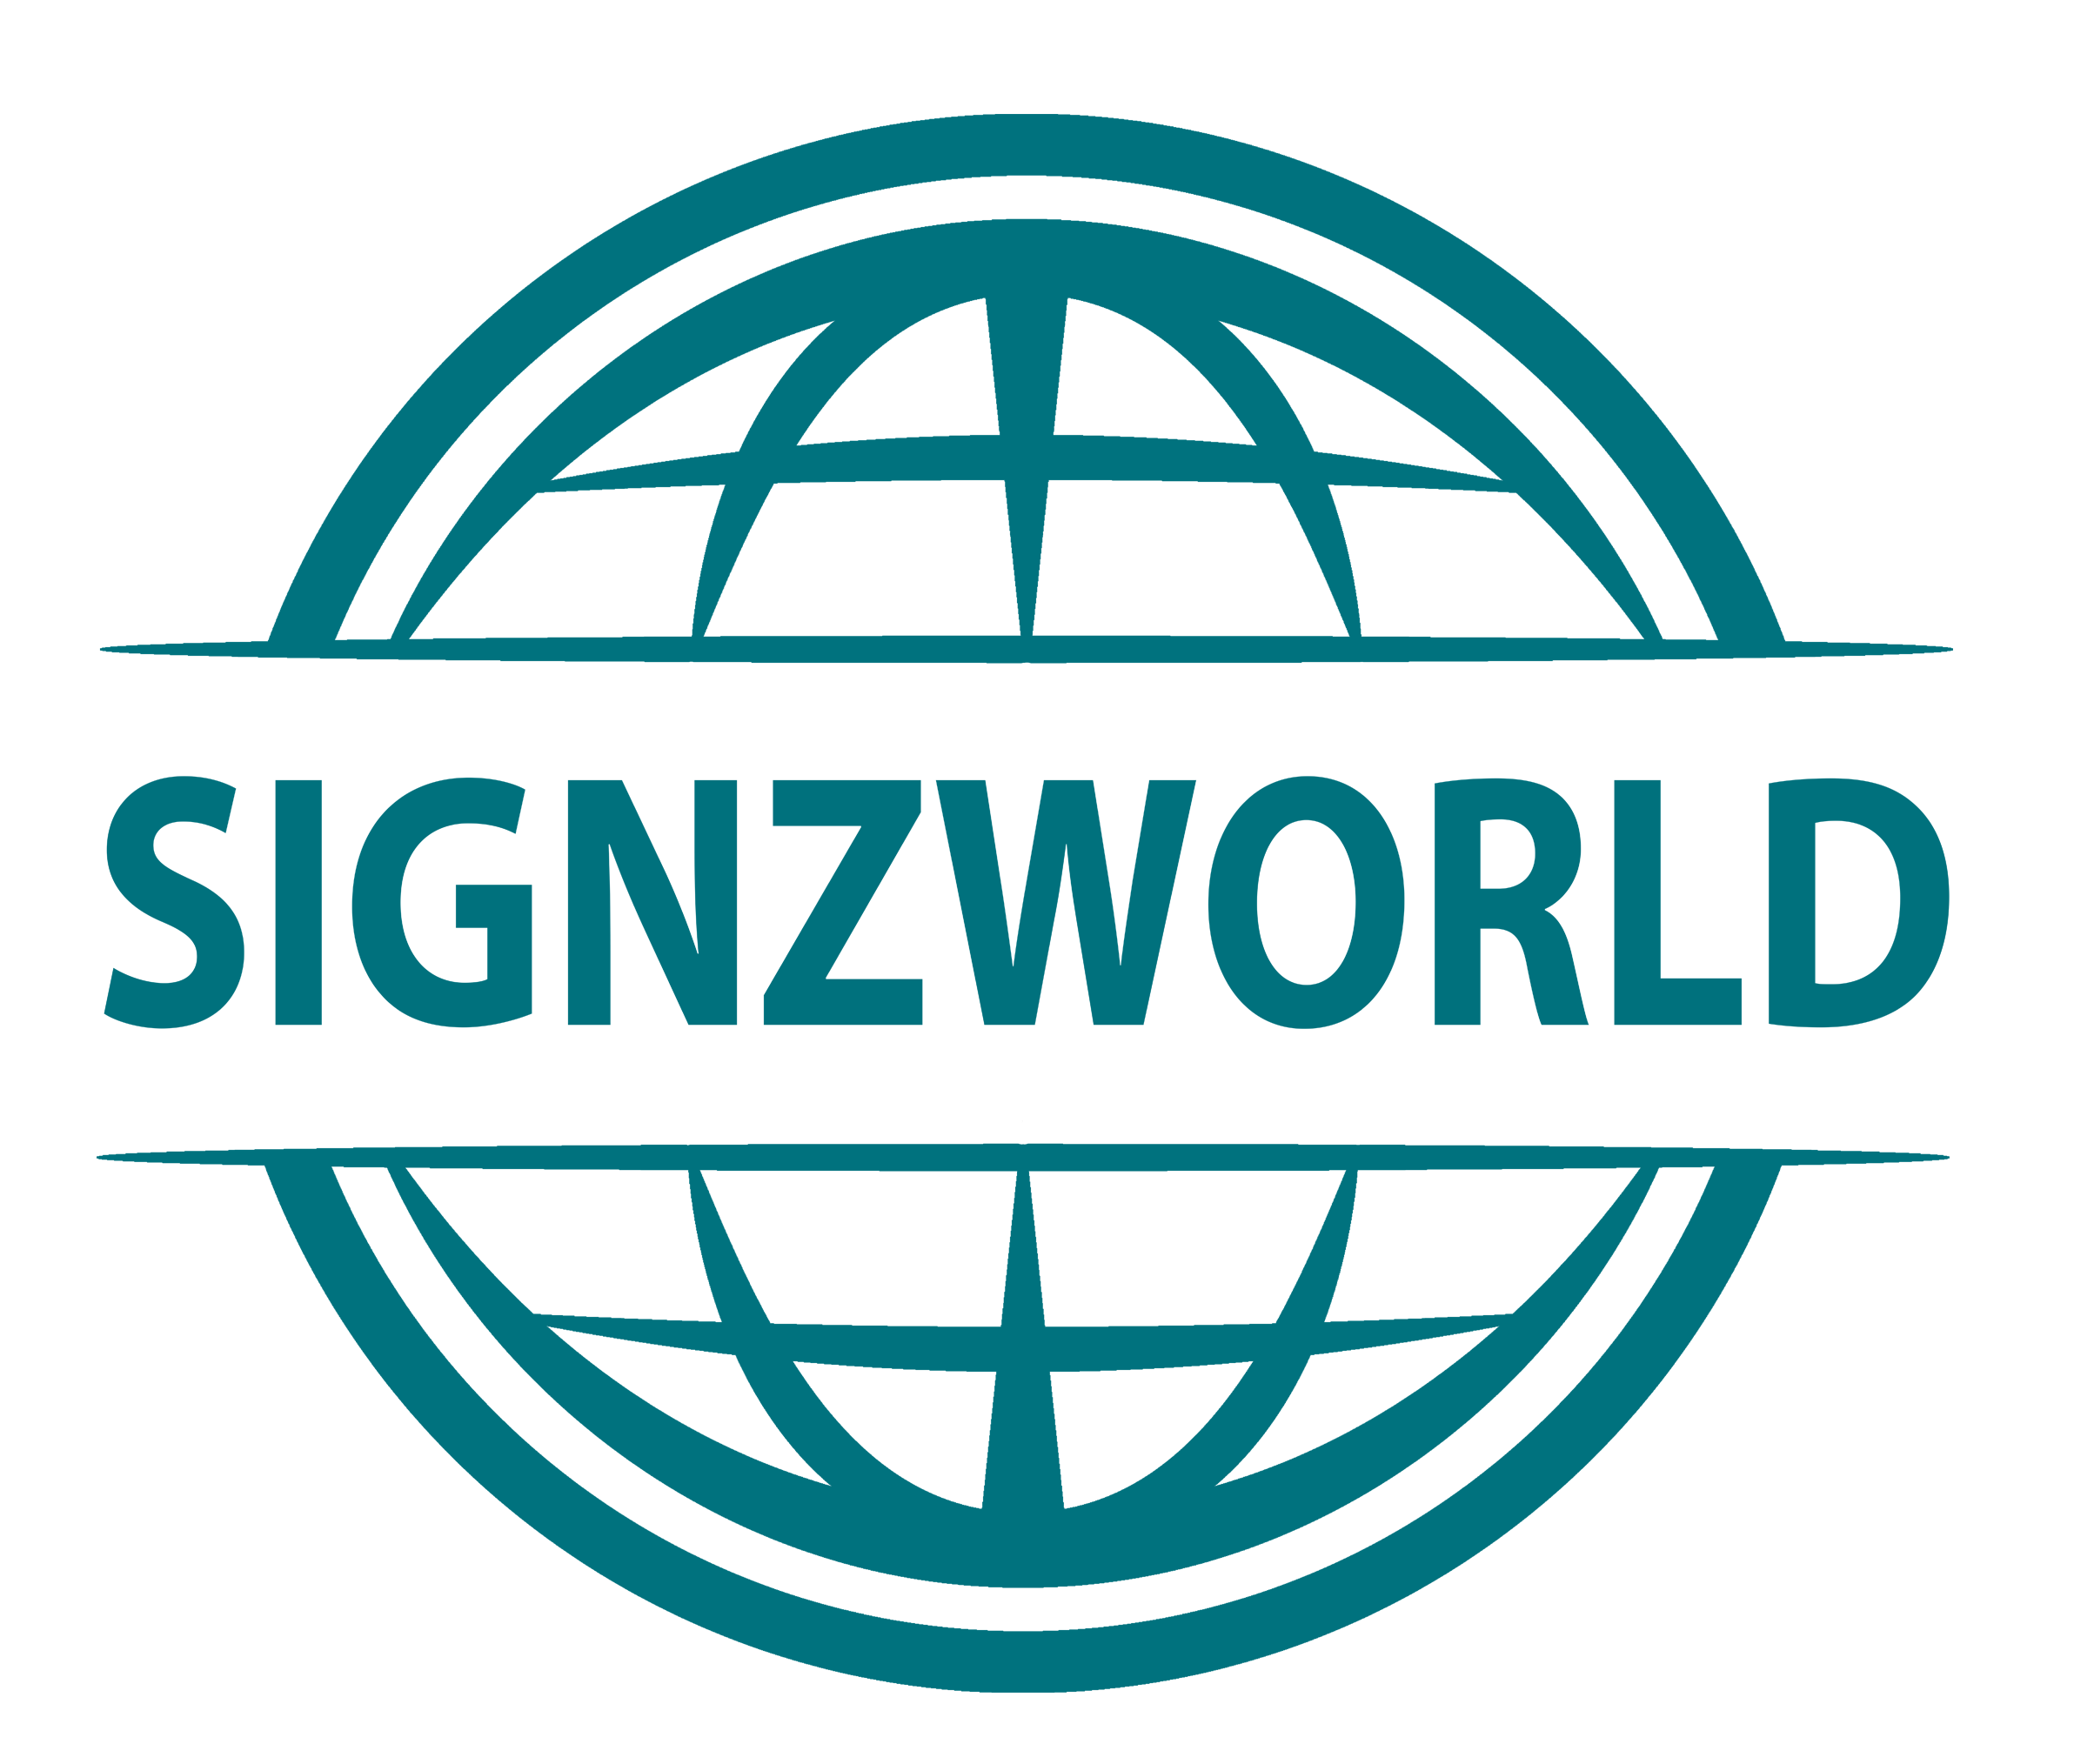 Signzworld Ltd